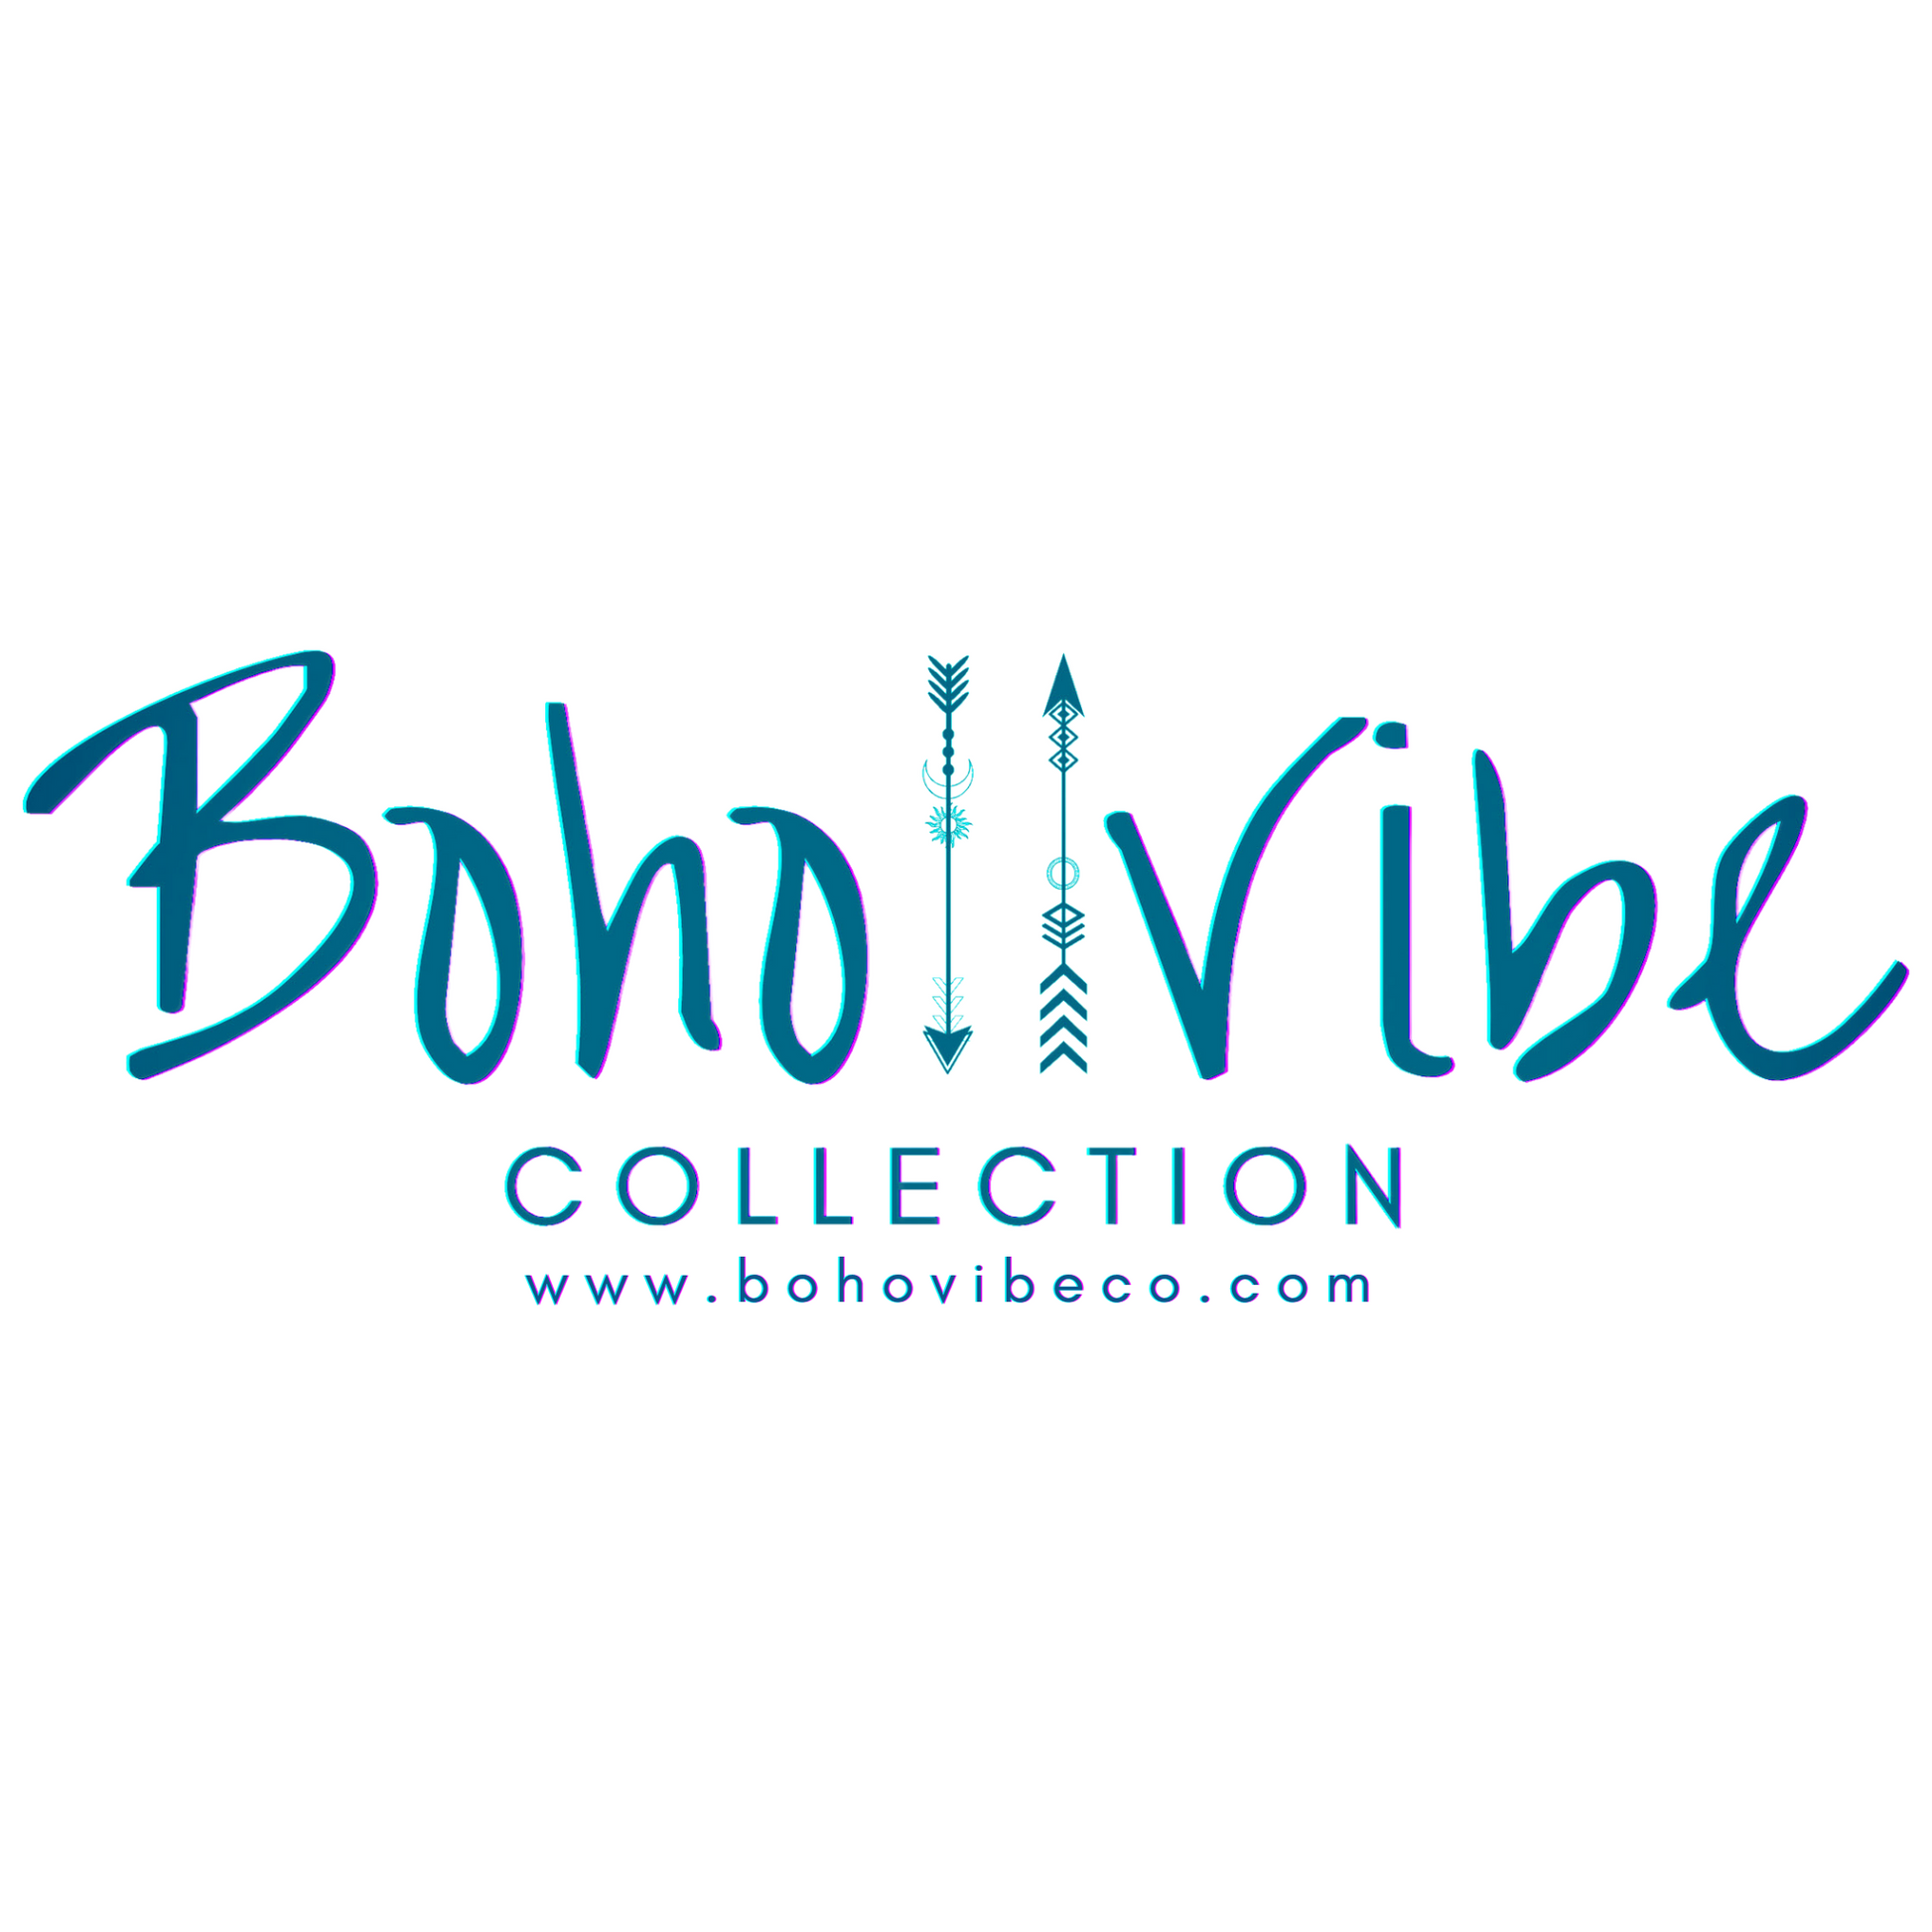 Boho ↡↟ Vibe Collection ↠ 2024 Astrology Diary ☀️ Southern Hemisphere ↠ Patsy Bennett 